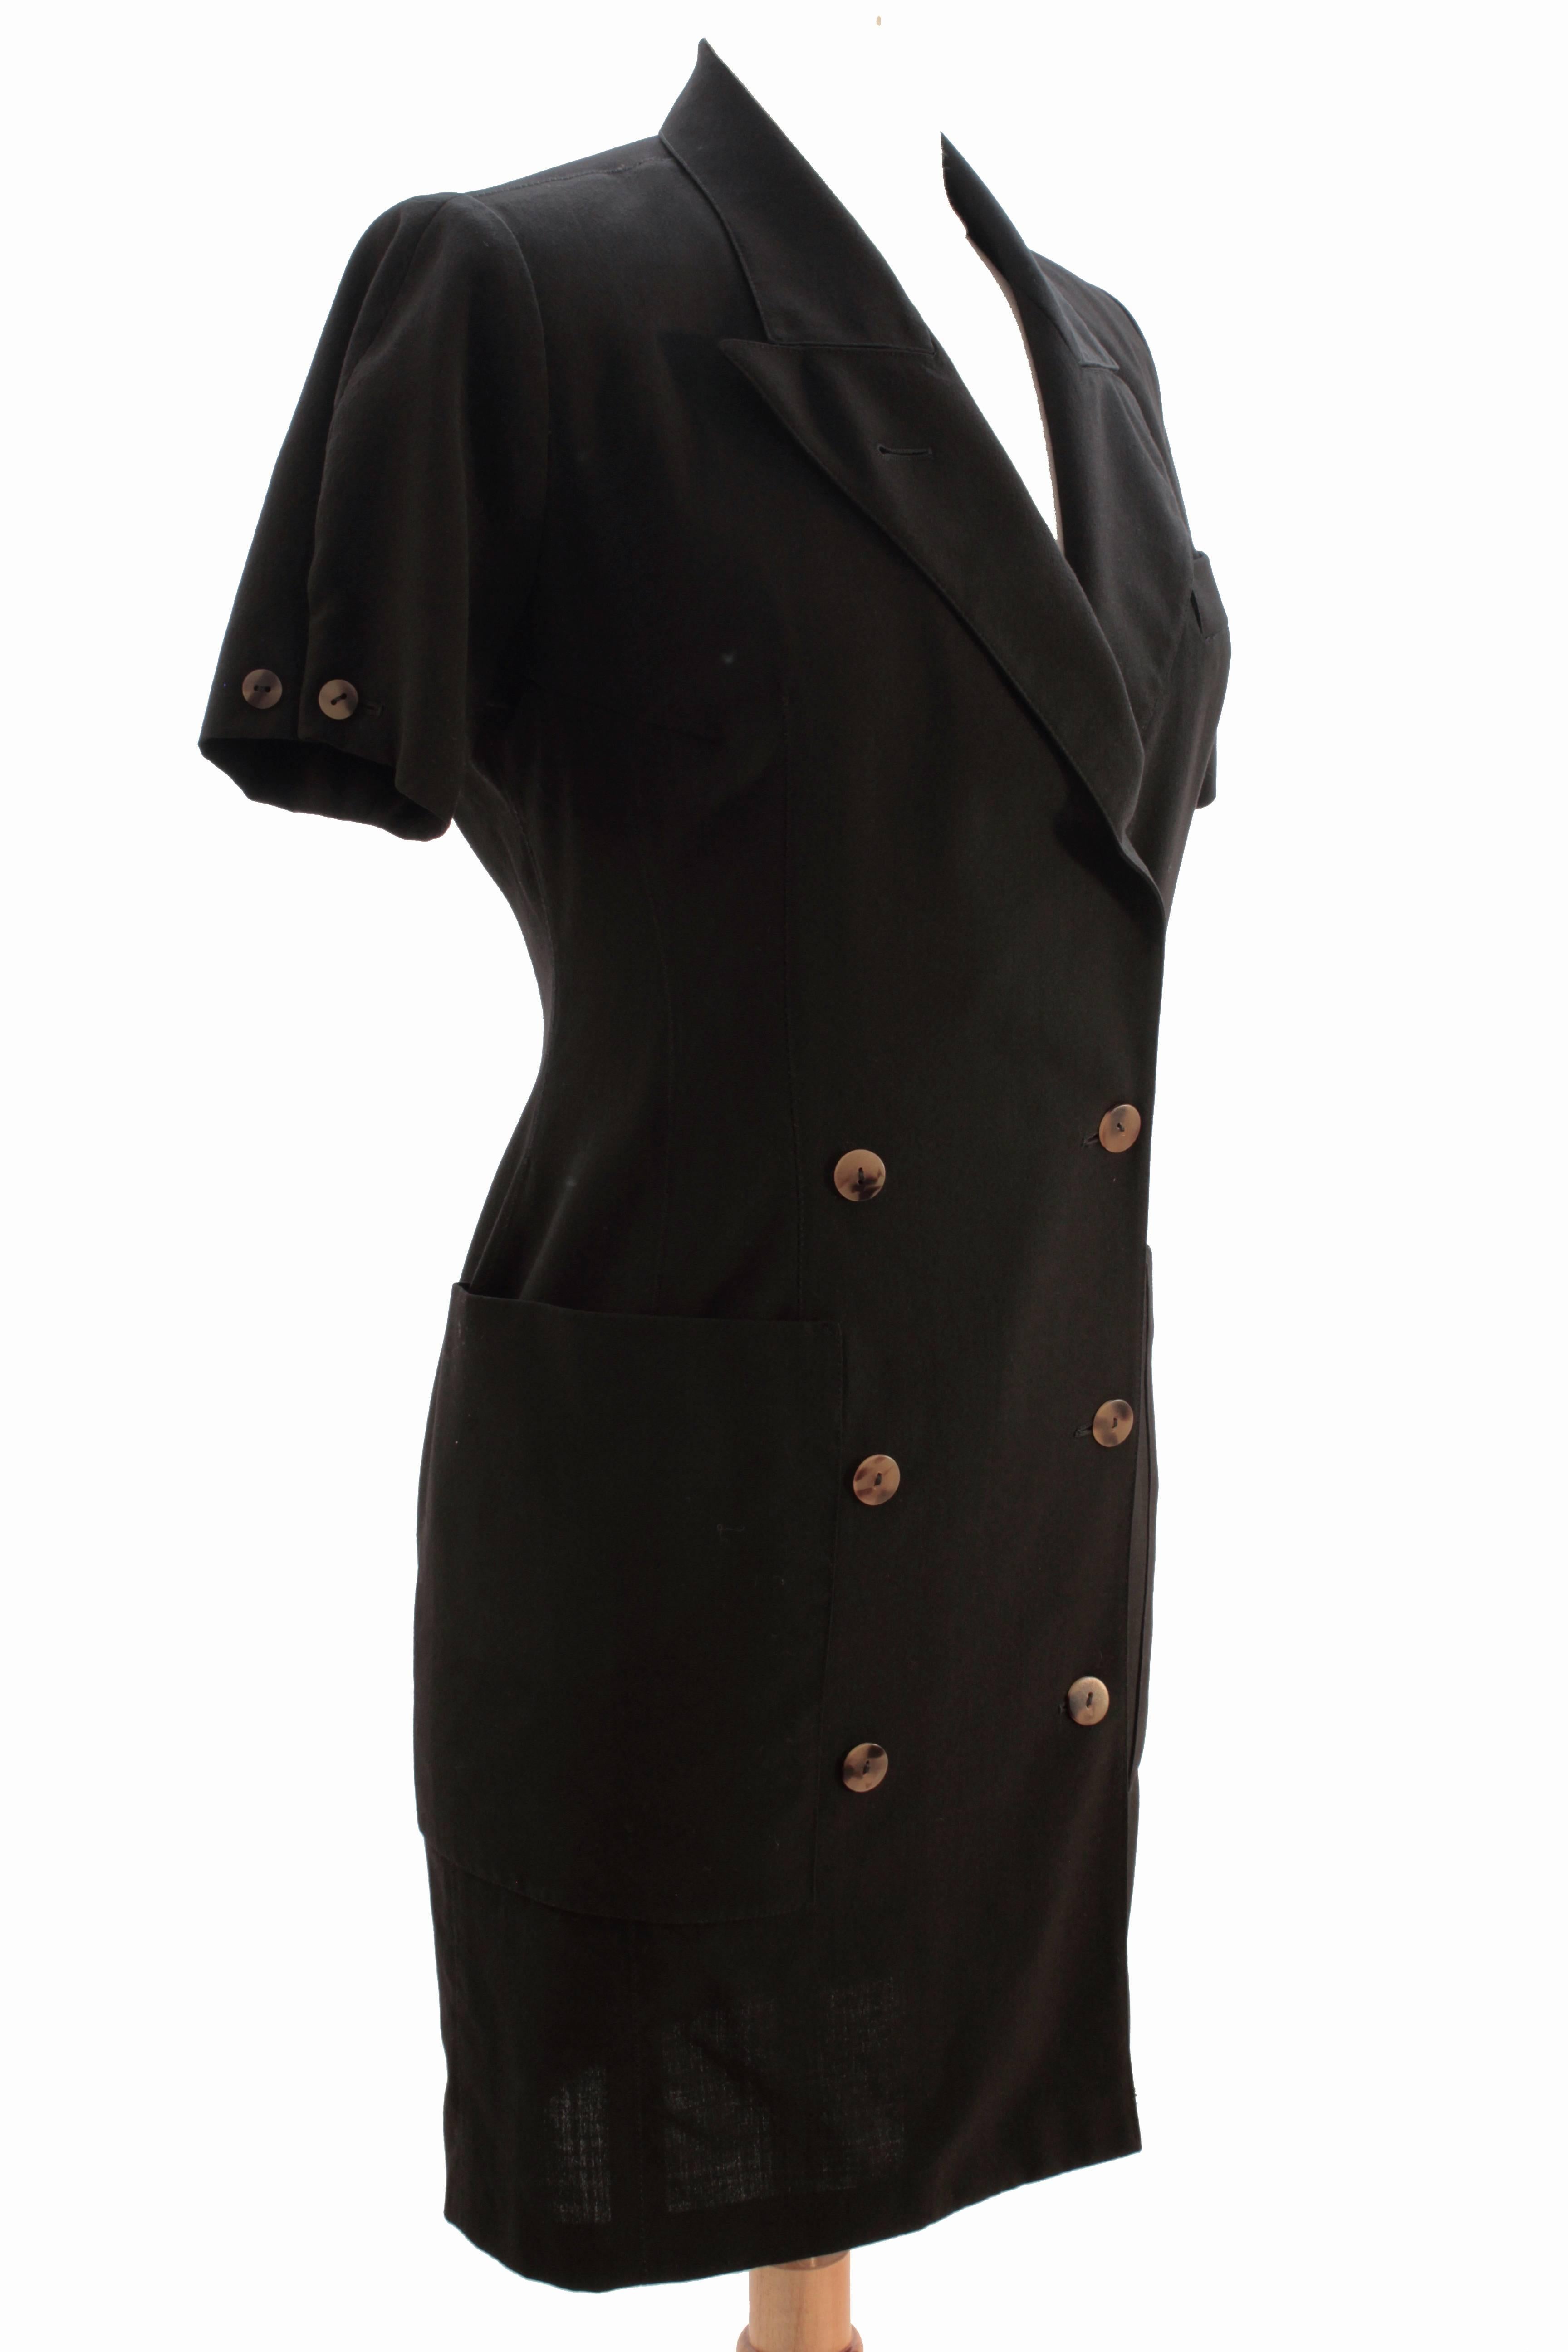 Jean Paul Gaultier Pour Gibo Black Shirt Dress Chic Oversized Pockets Sz 40 90s 1